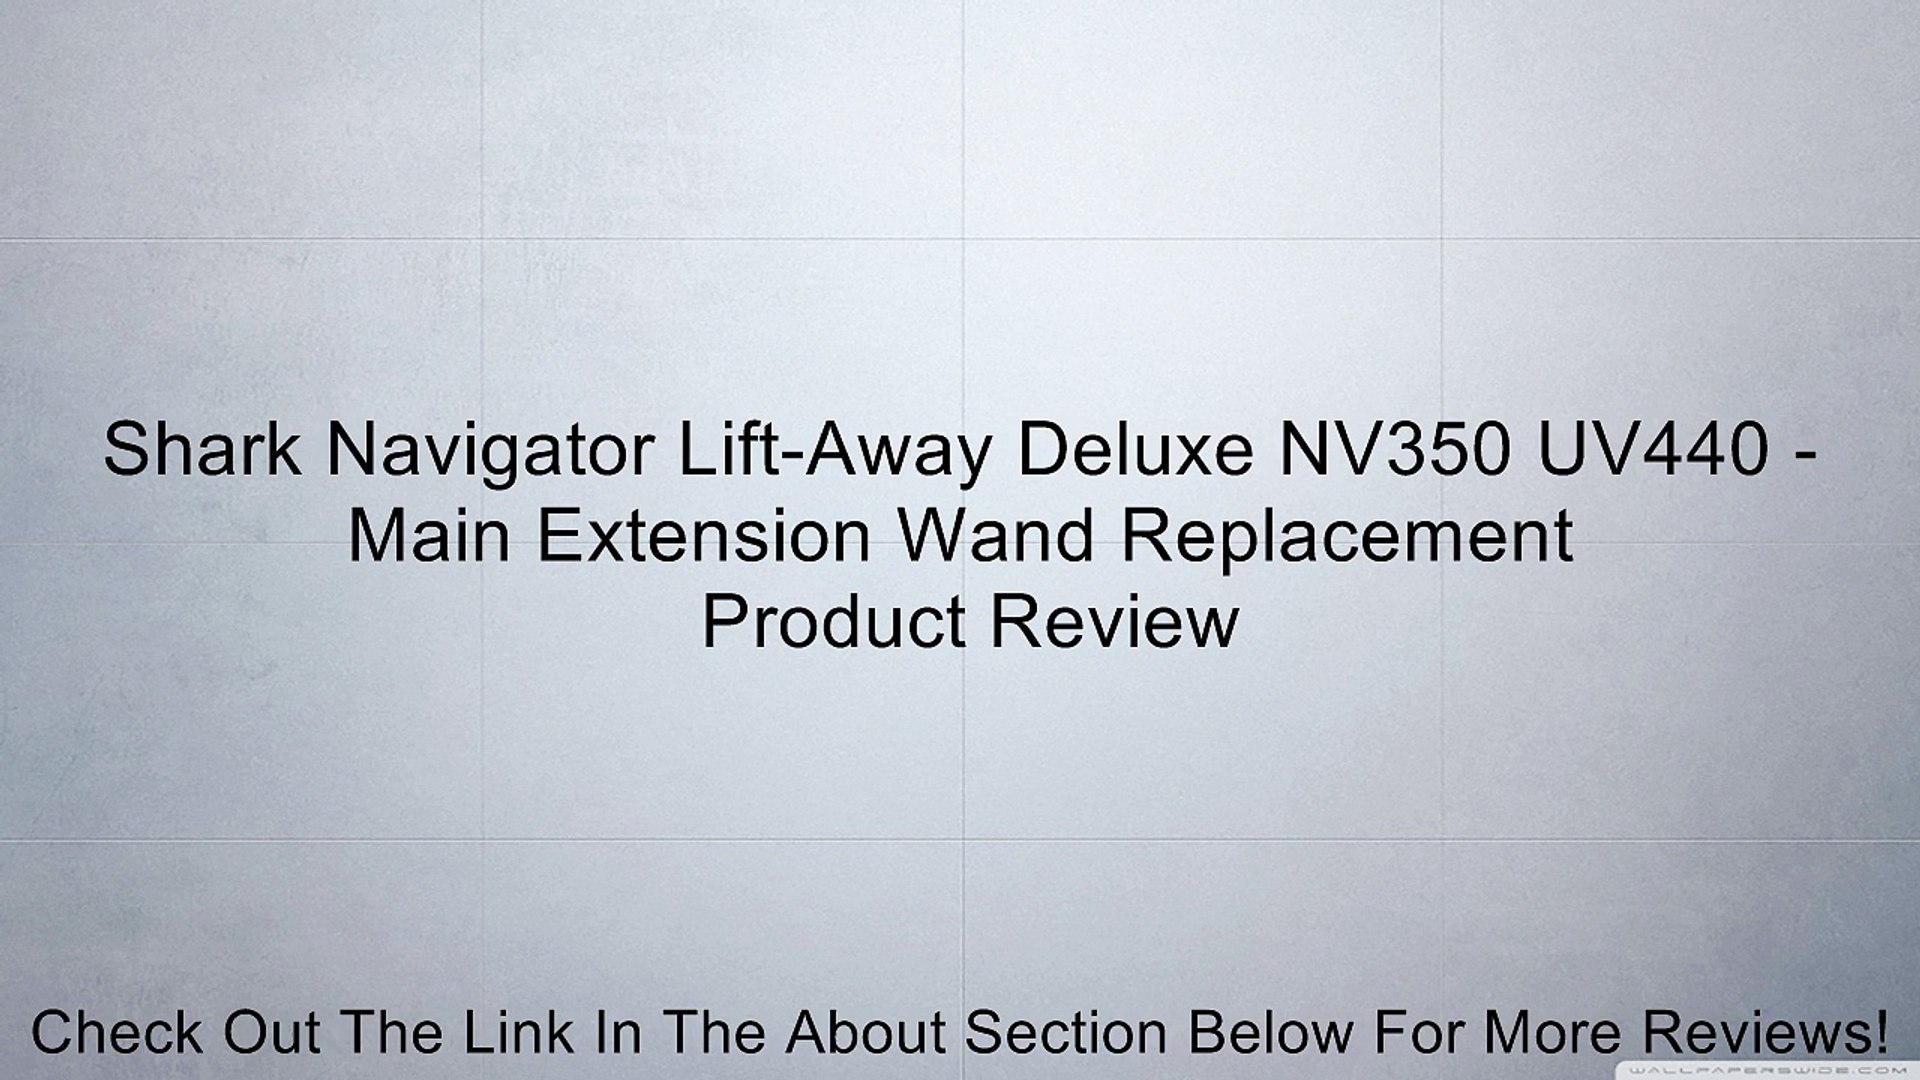 Shark Navigator Lift-Away Deluxe NV350 UV440 Main Extension Wand Replacement